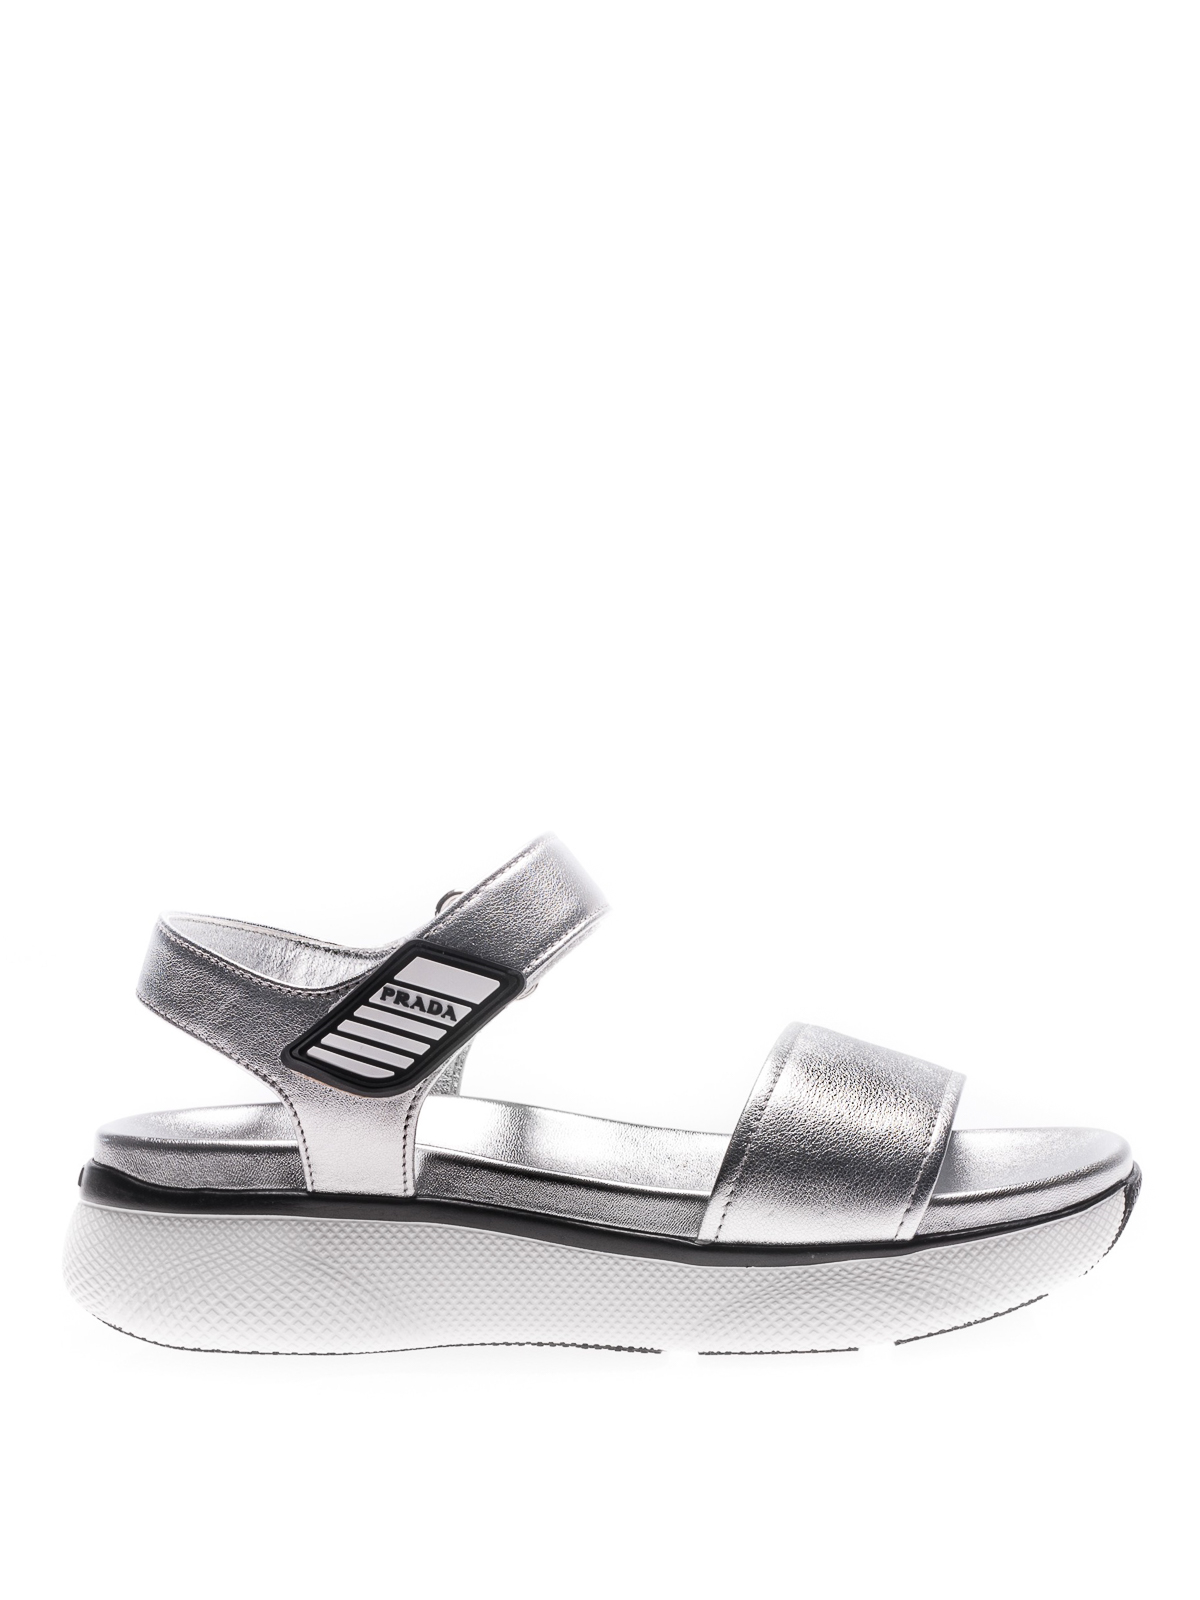 Prada - Silver leather strap sandals 